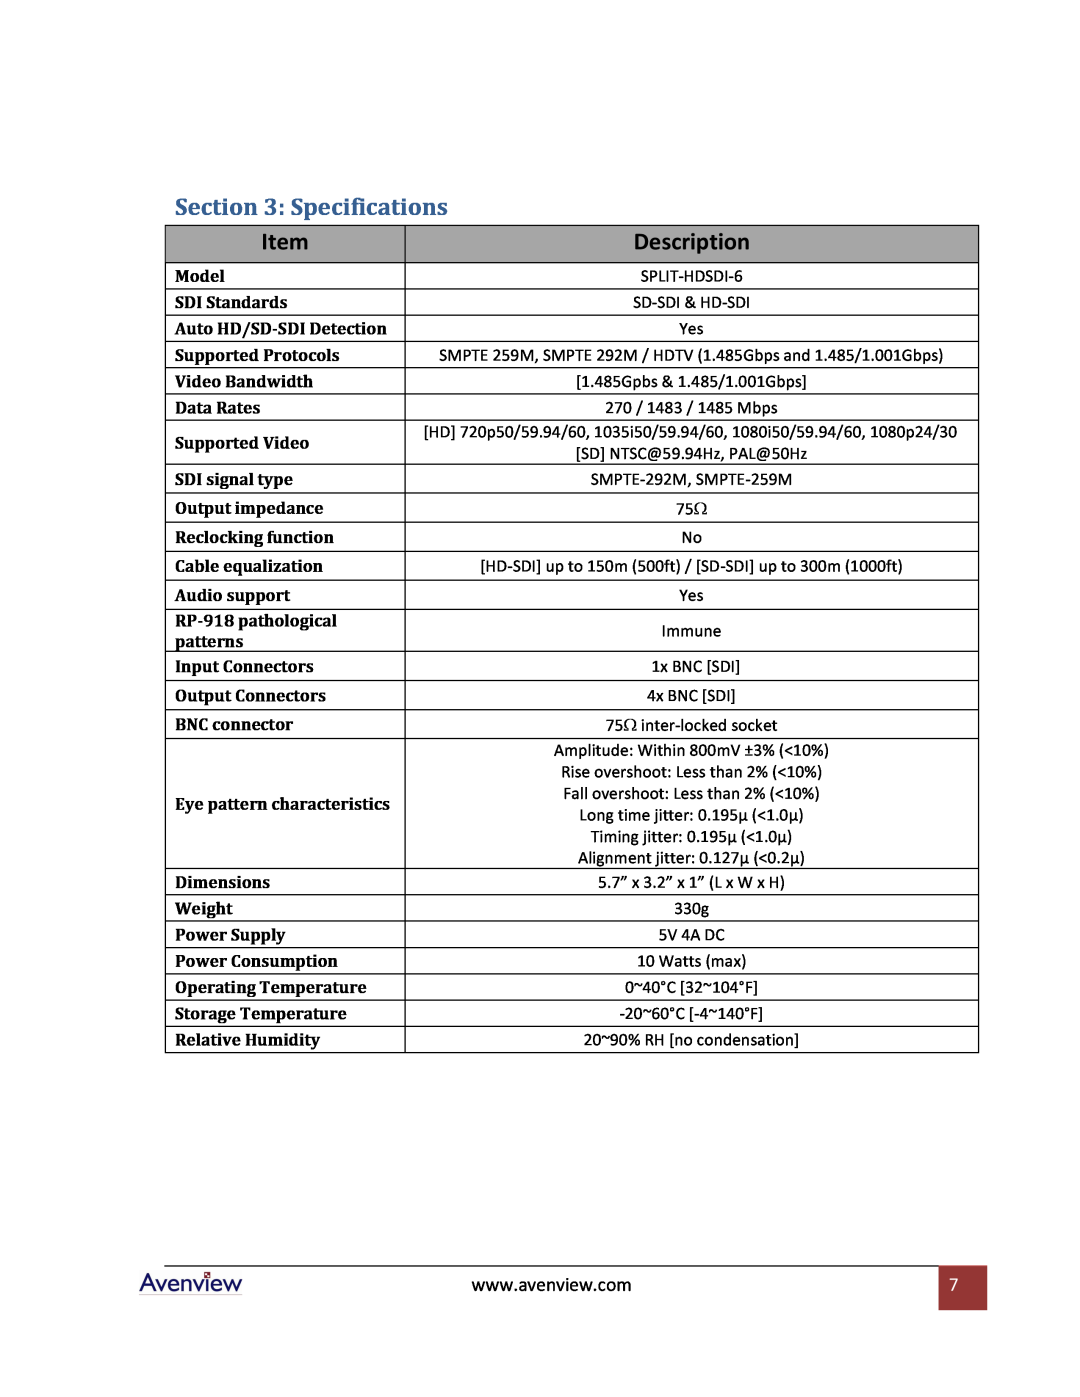 Avenview SPLIT-HDSDI-6 specifications Specifications, Description 